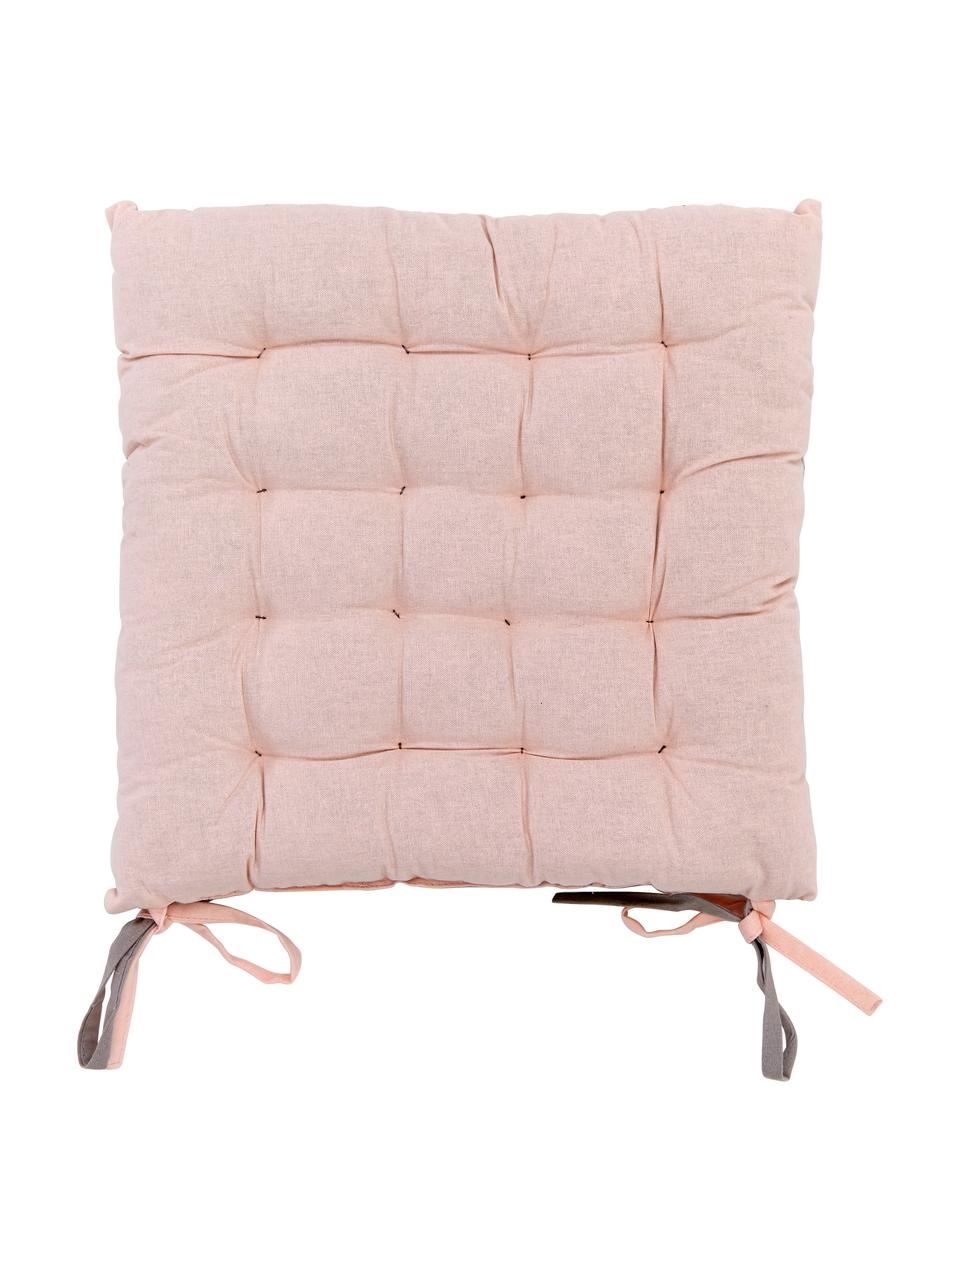 Oboustranný podsedák na židli Duo, 2 ks, Pudrově růžová, šedá, Š 35 cm, D 35 cm